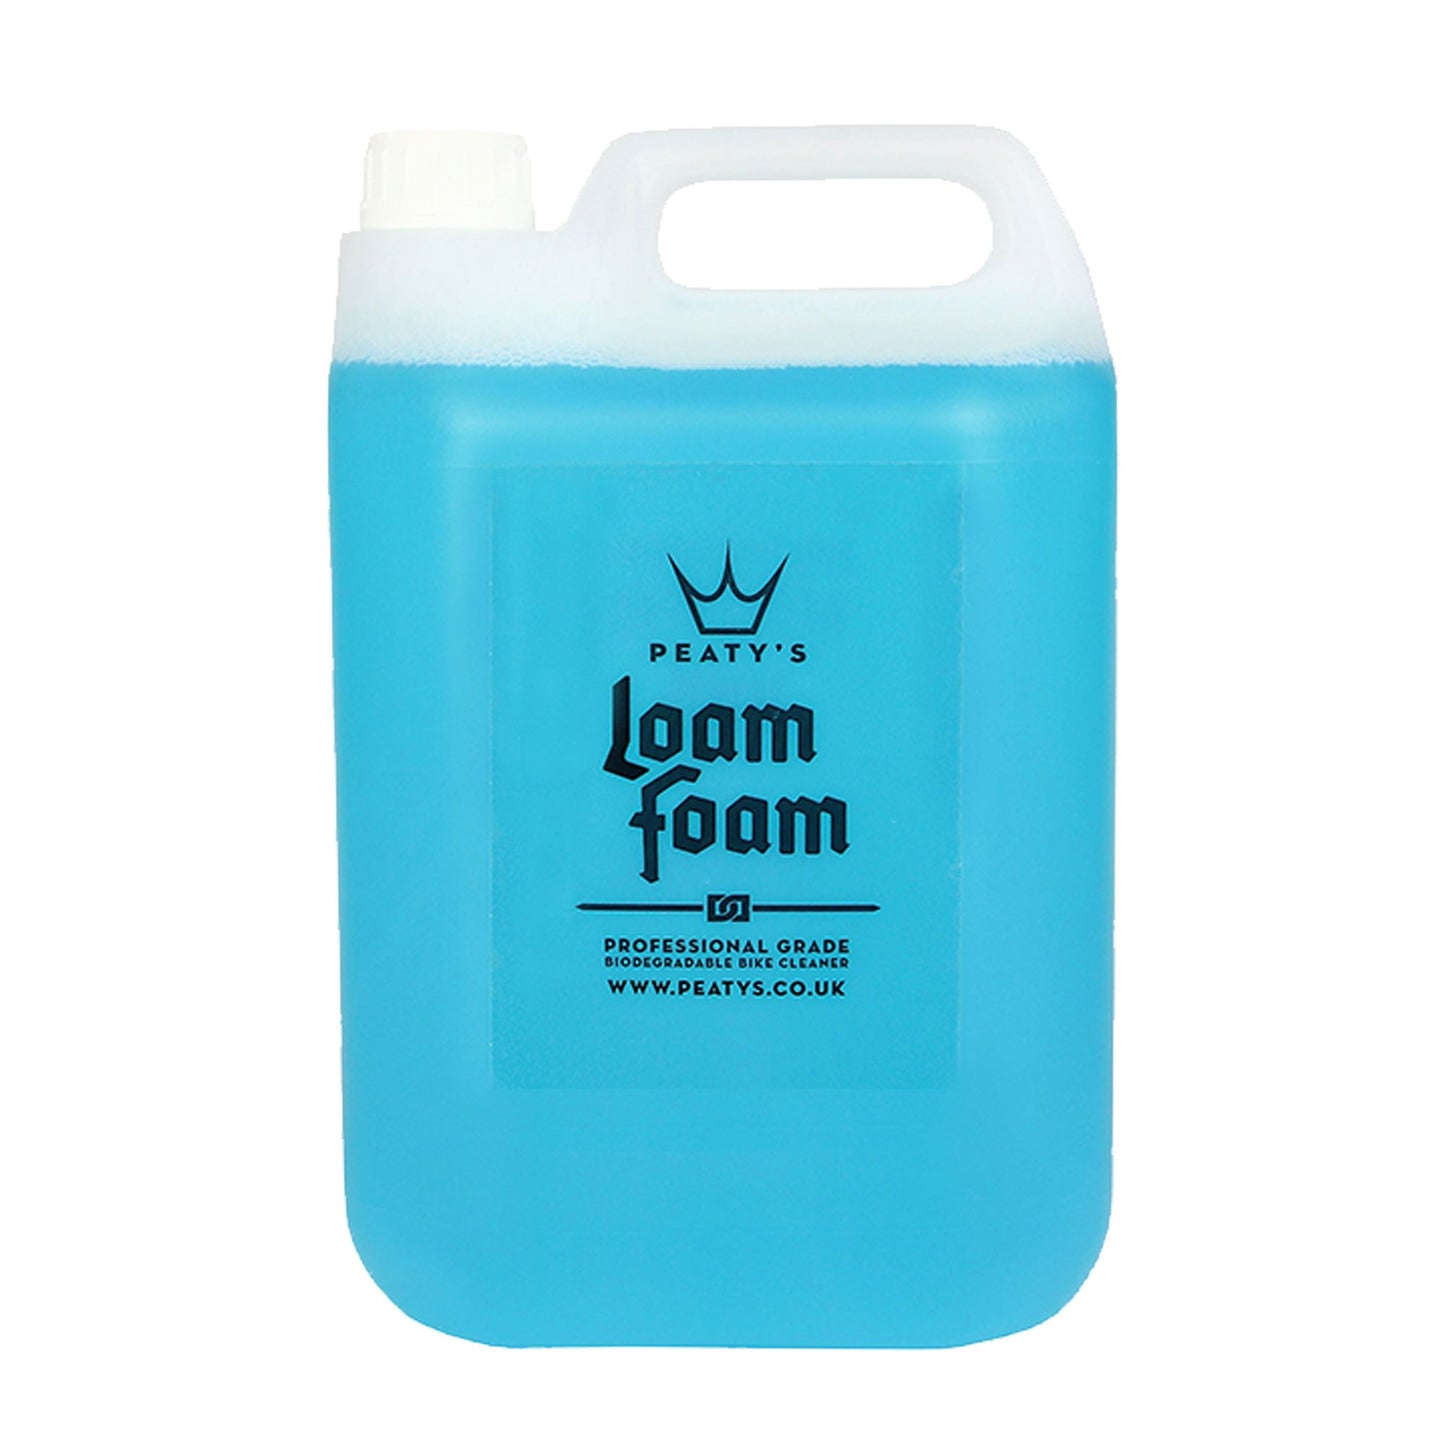 Peatys LoamFoam Cleaner